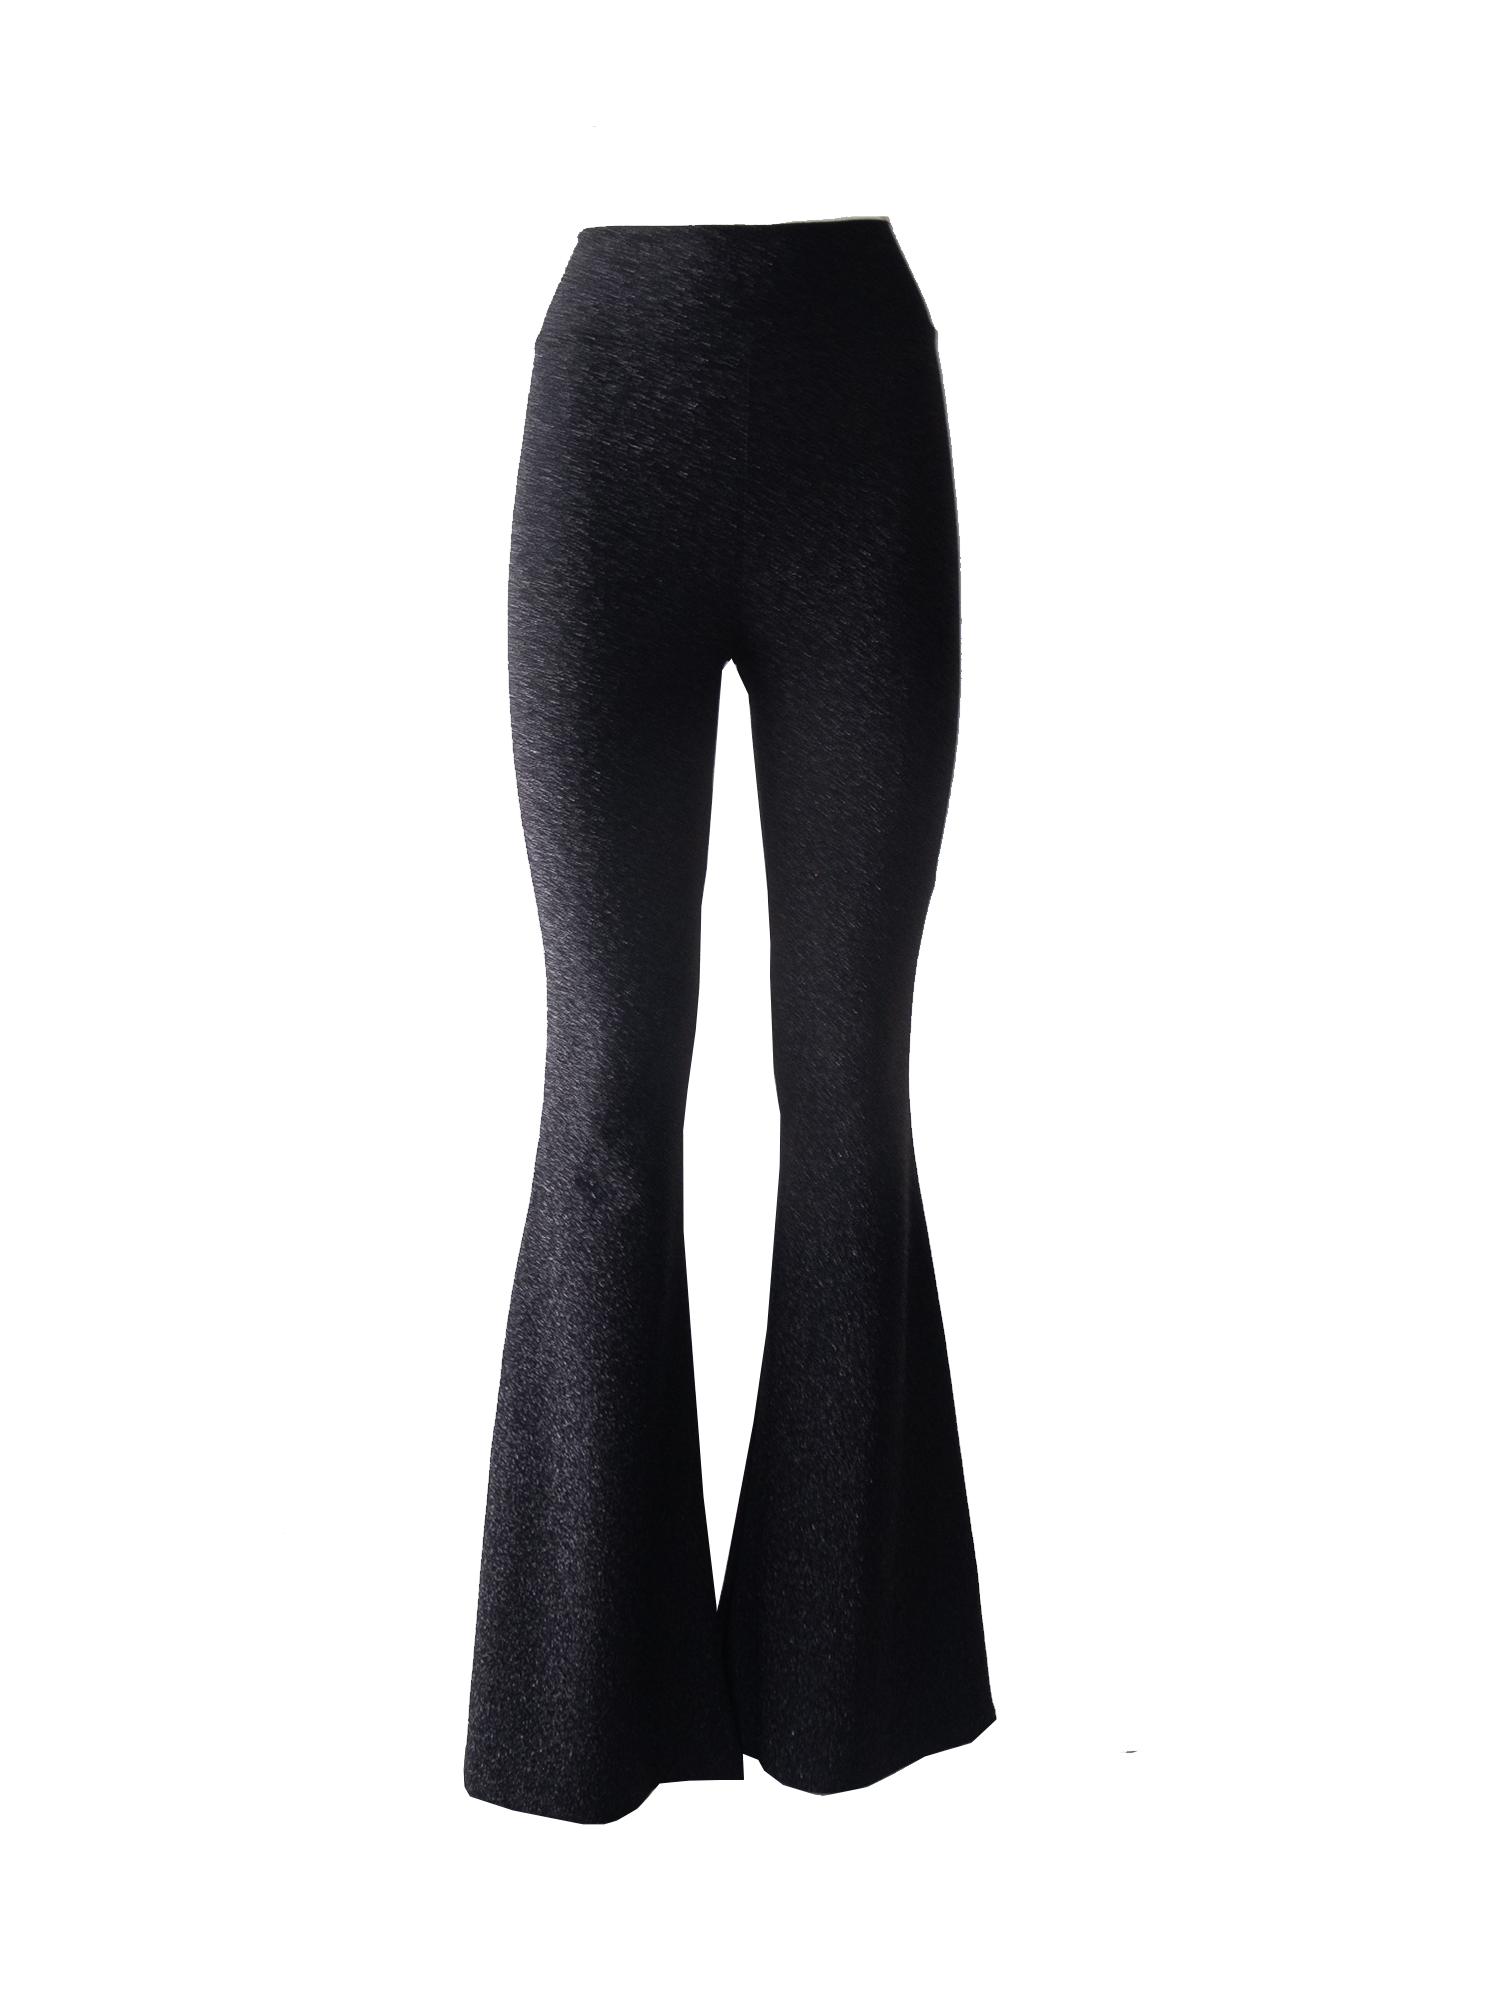 LOLA - flared trouser with high waist in black lurex